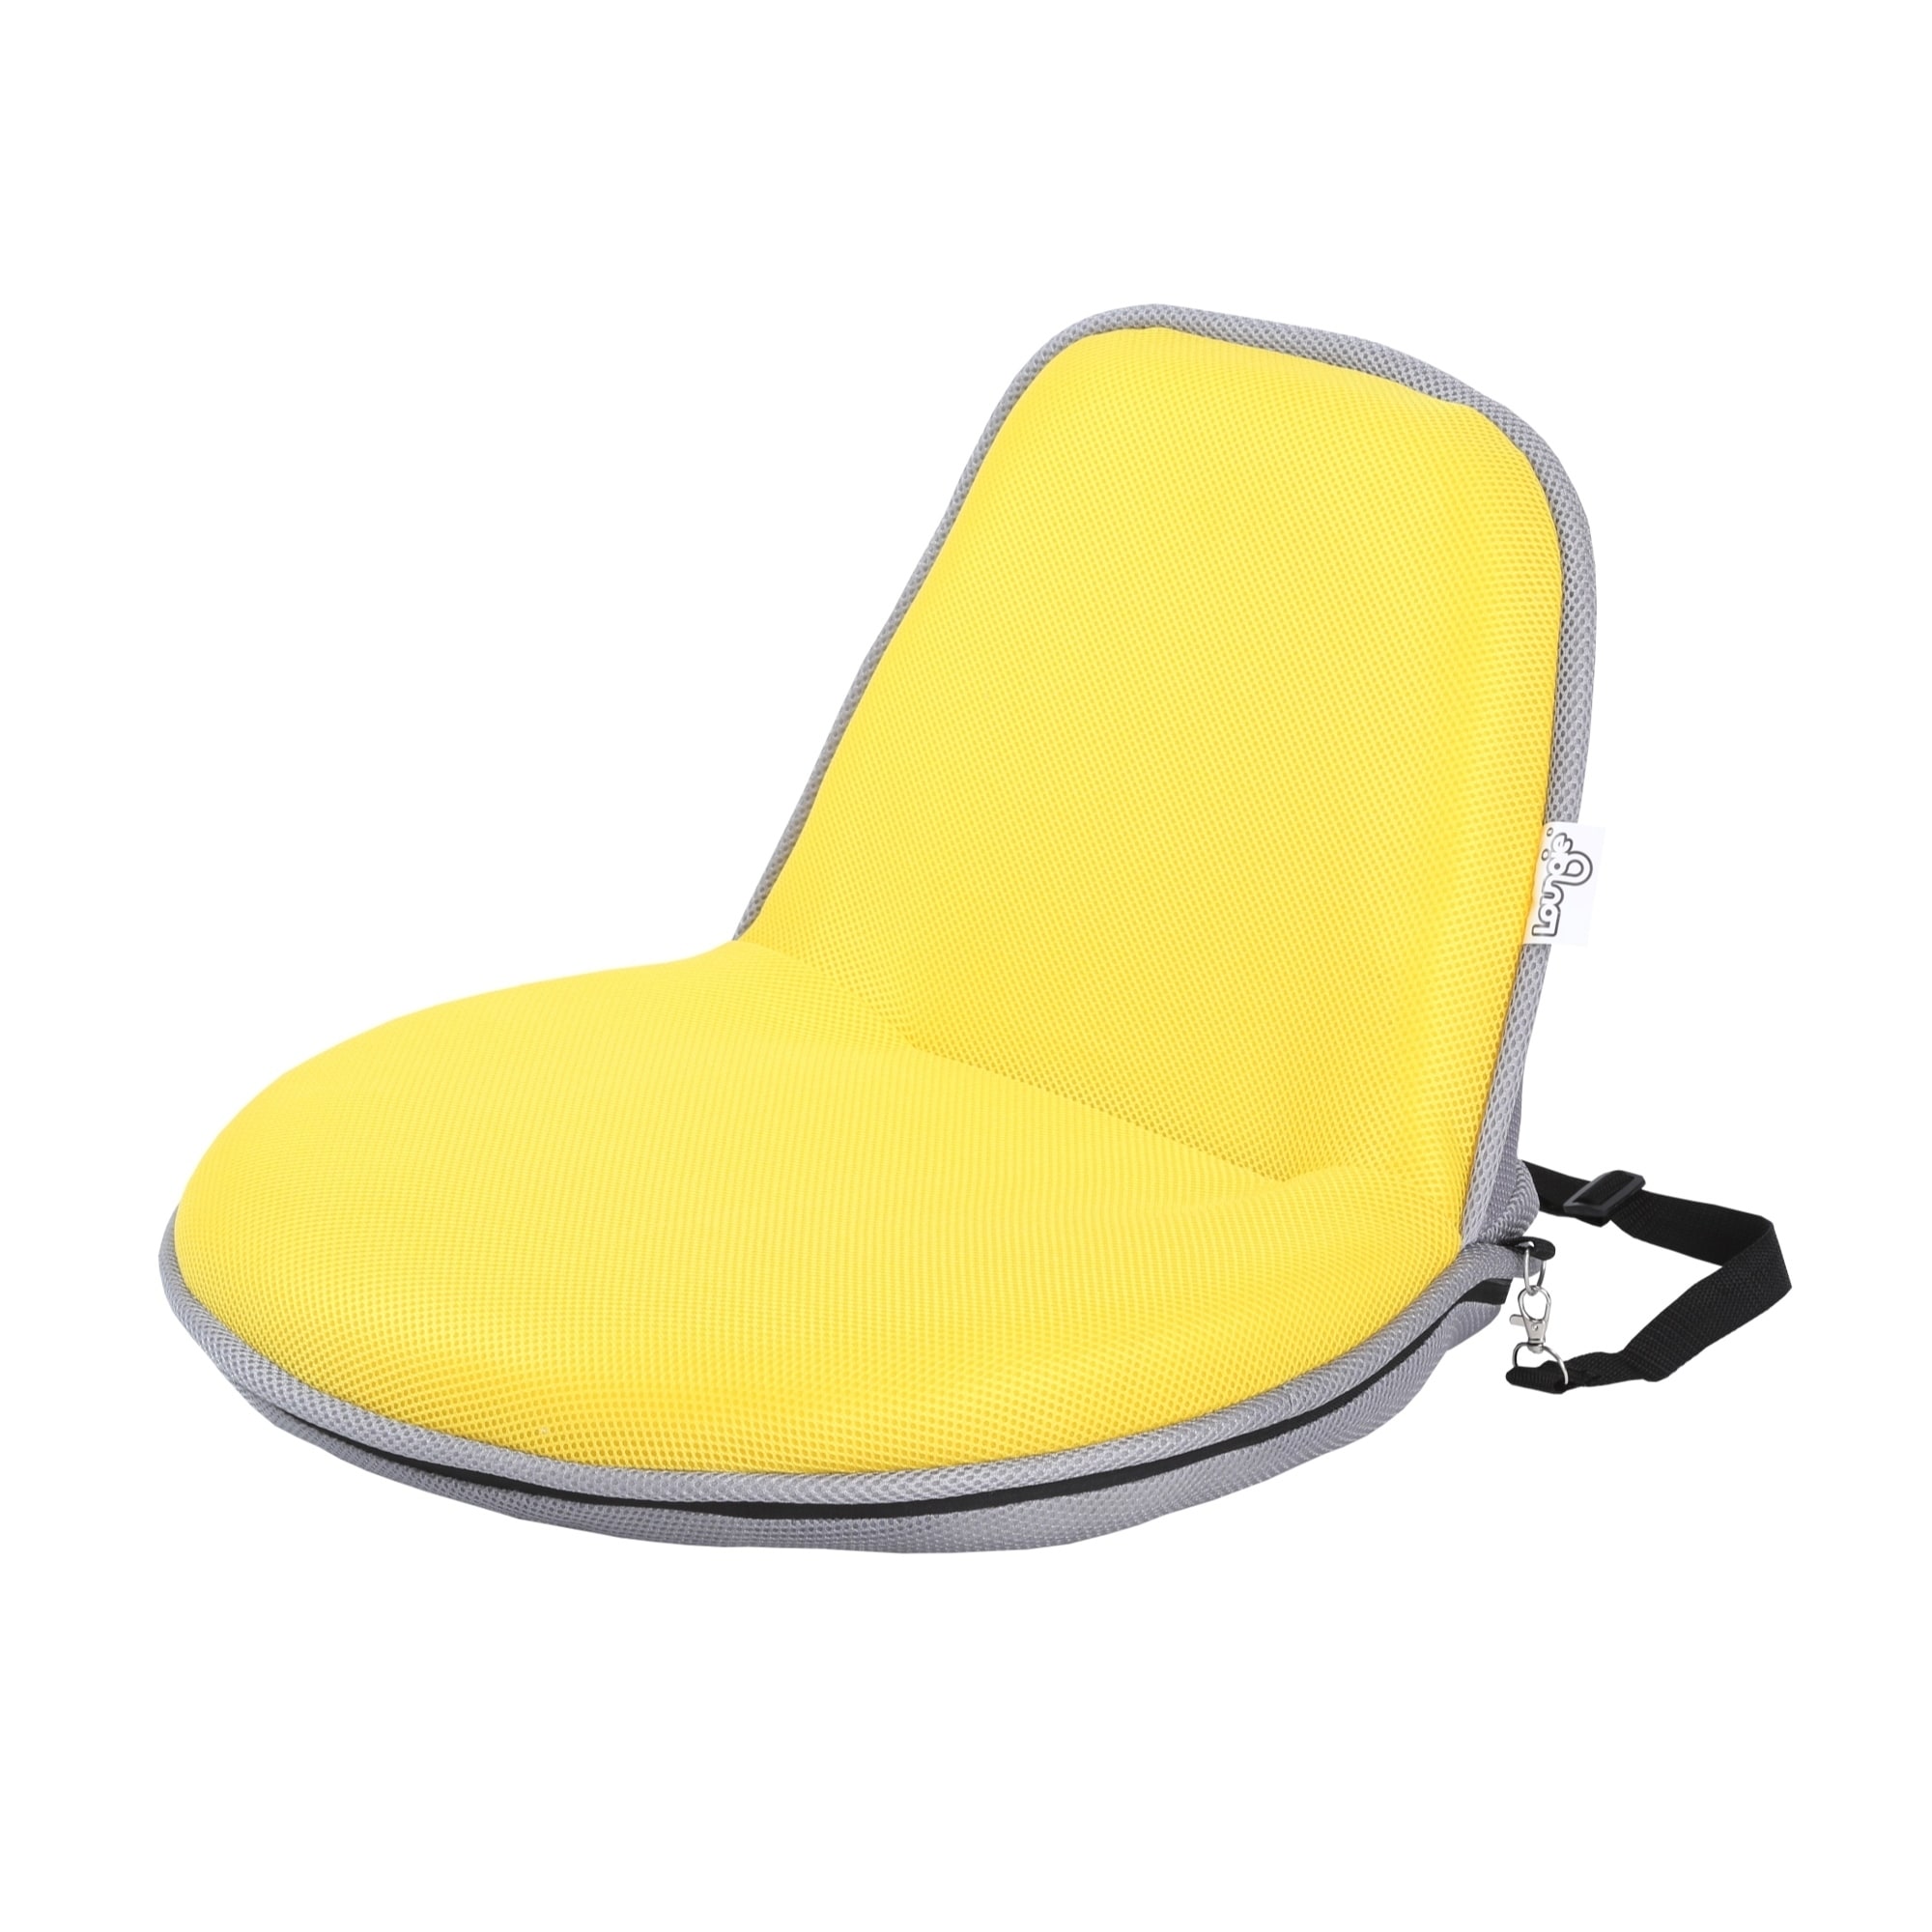 Loungie Indoor/outdoor Portable Foldable Mesh Floor Chair